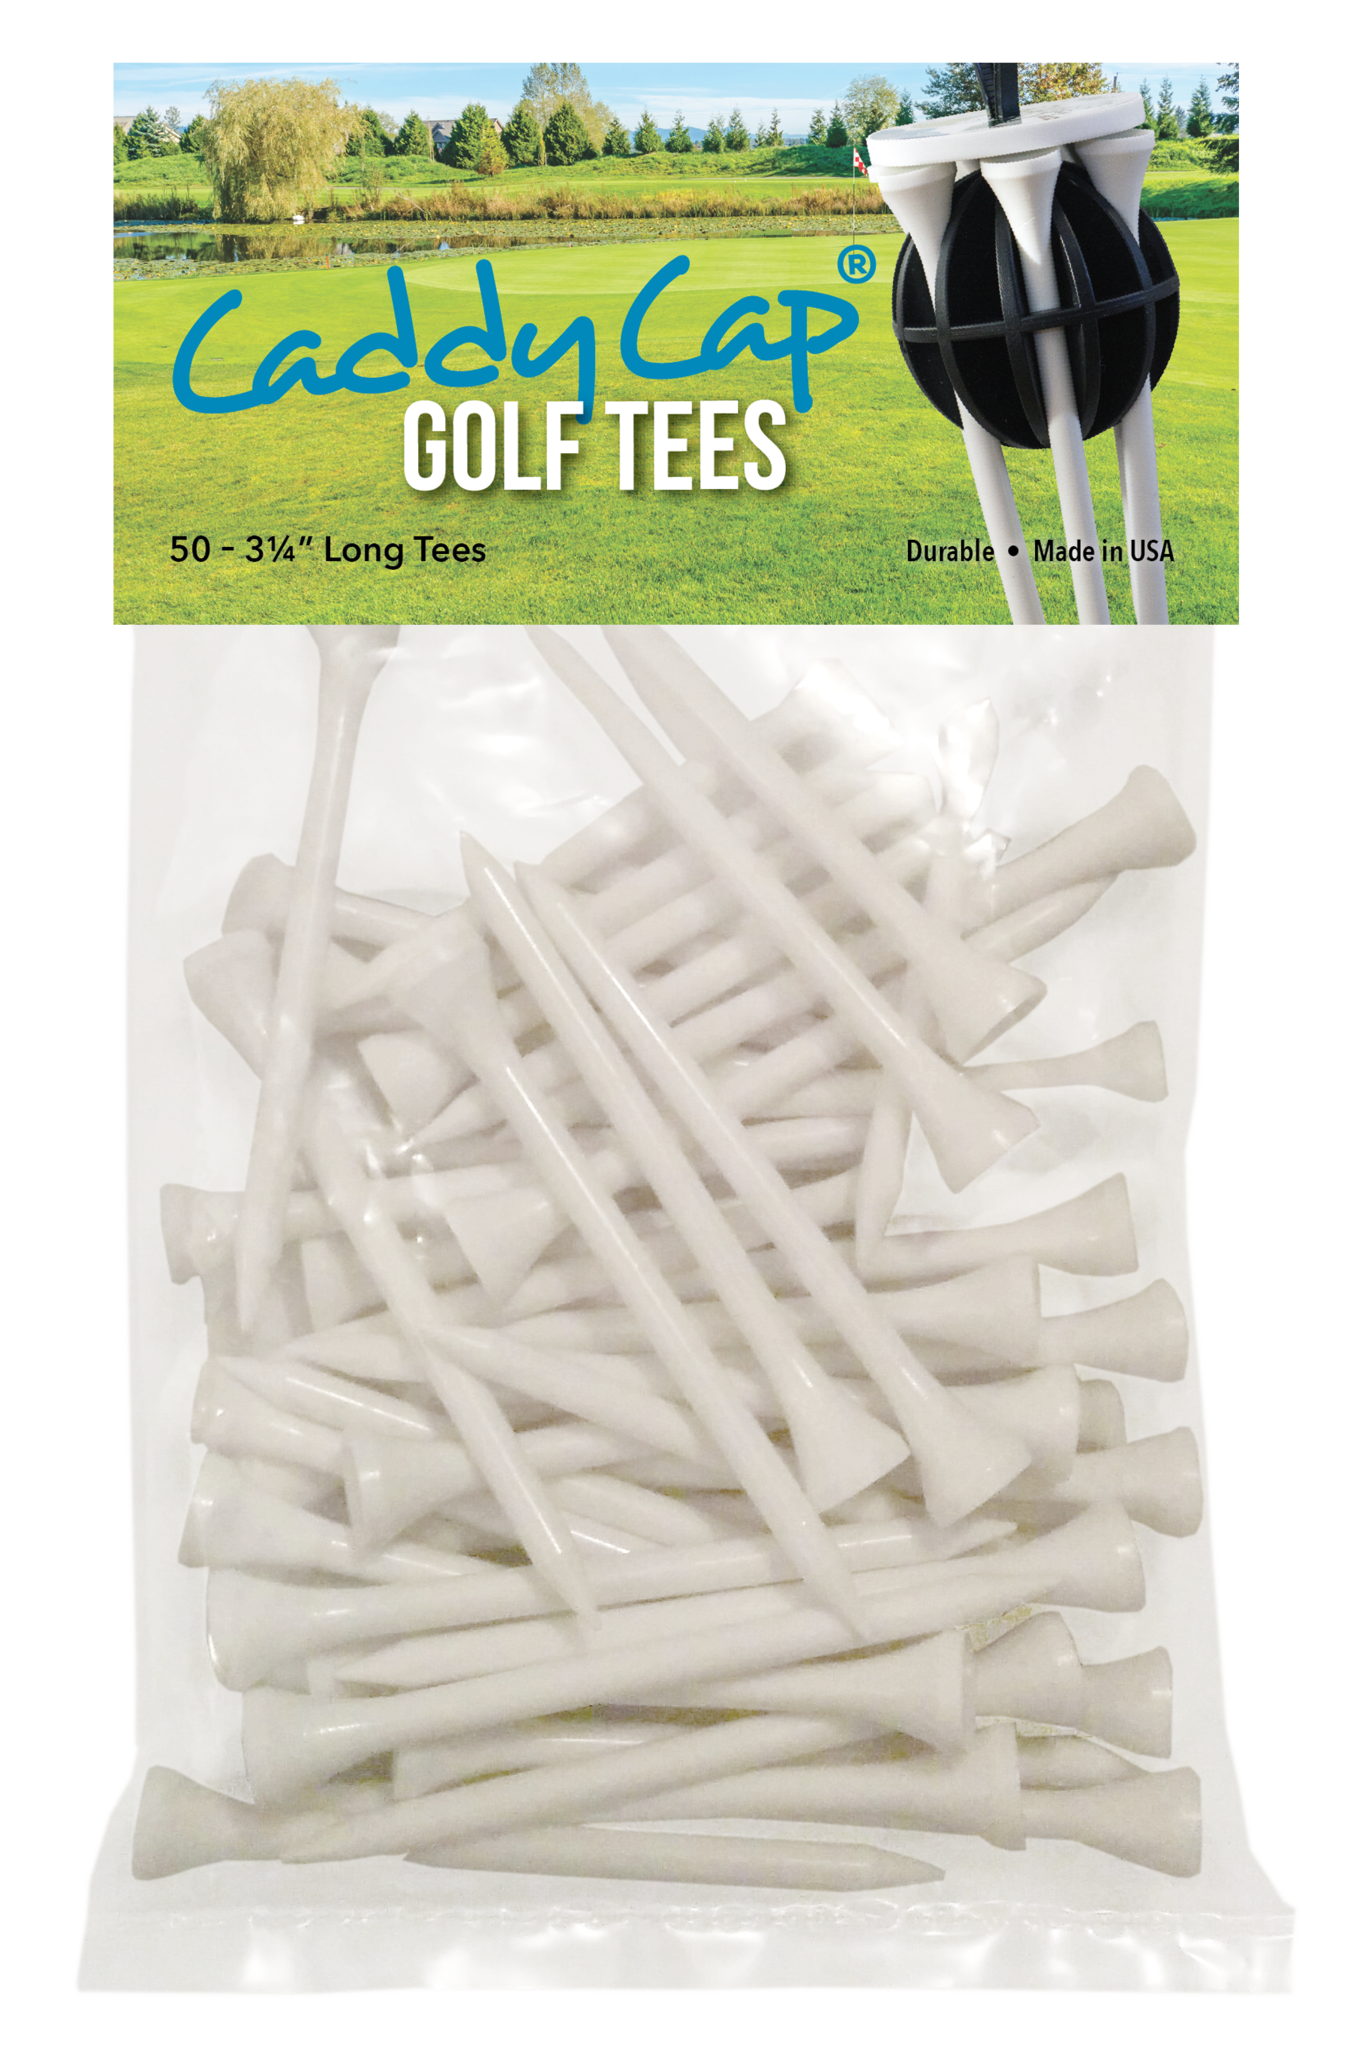 CaddyCap Golf Tees